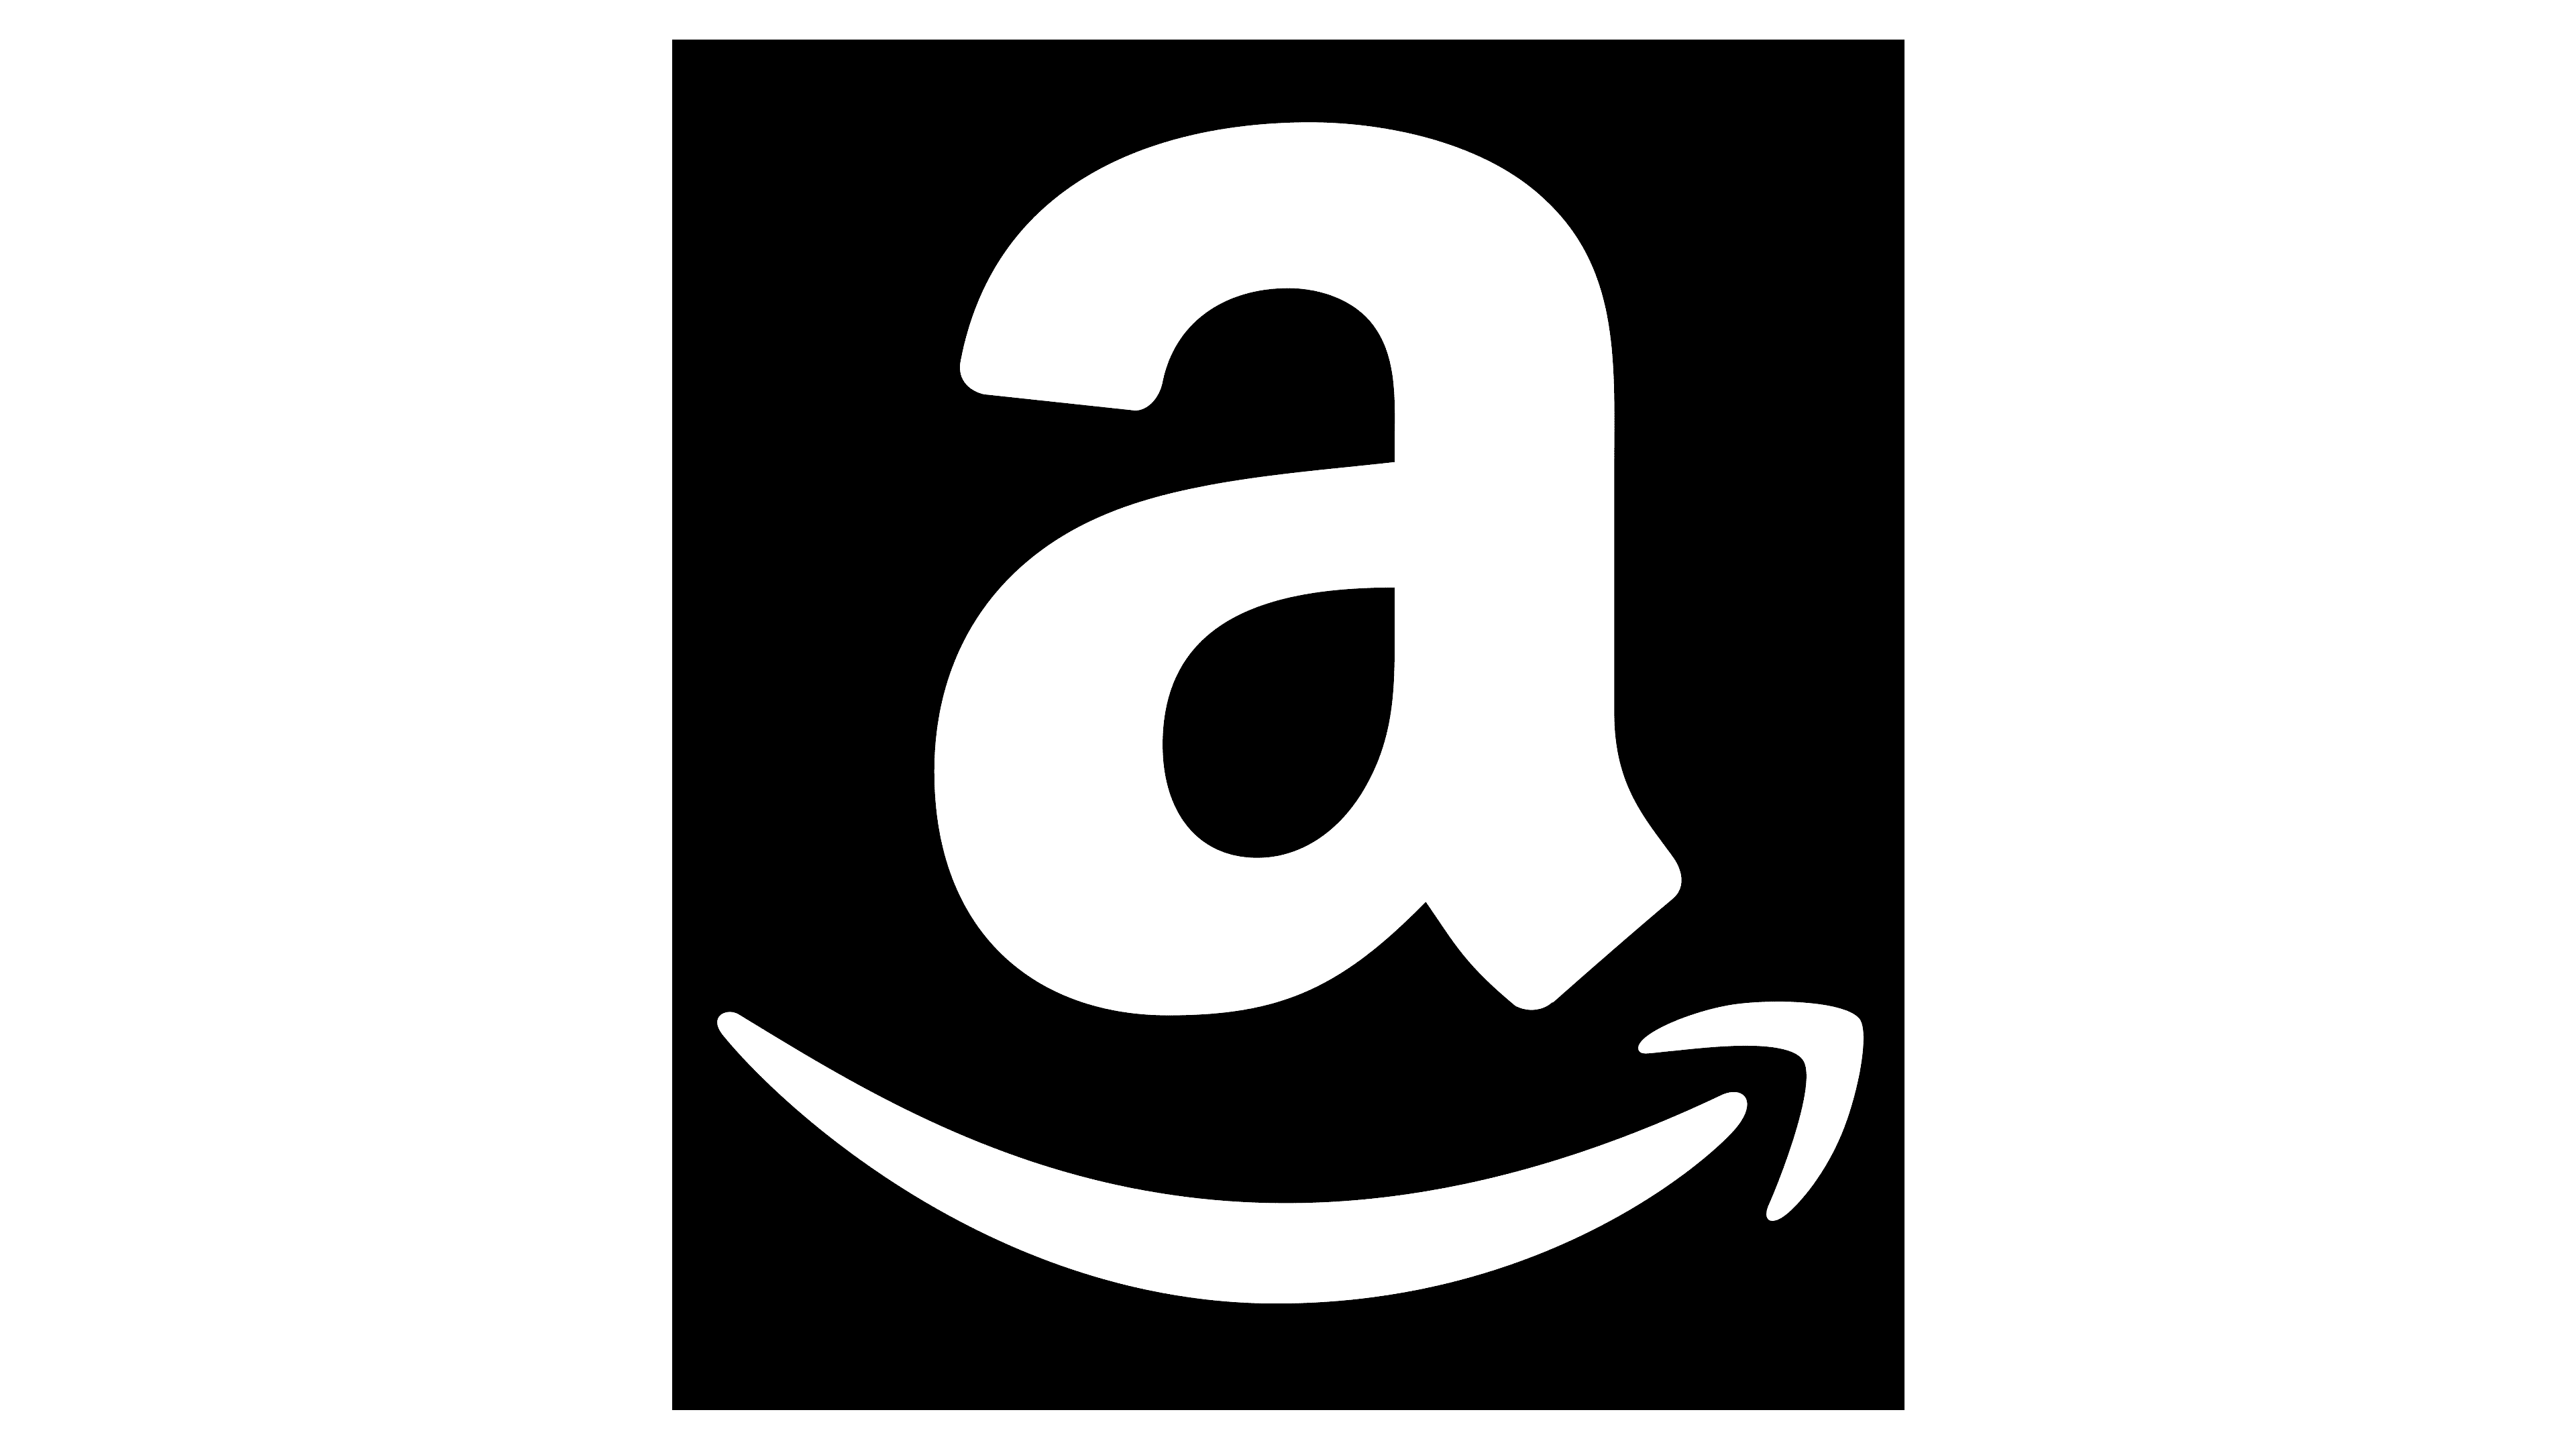 Logo De Amazon Simbolo Significado E Historia De La Marca Images